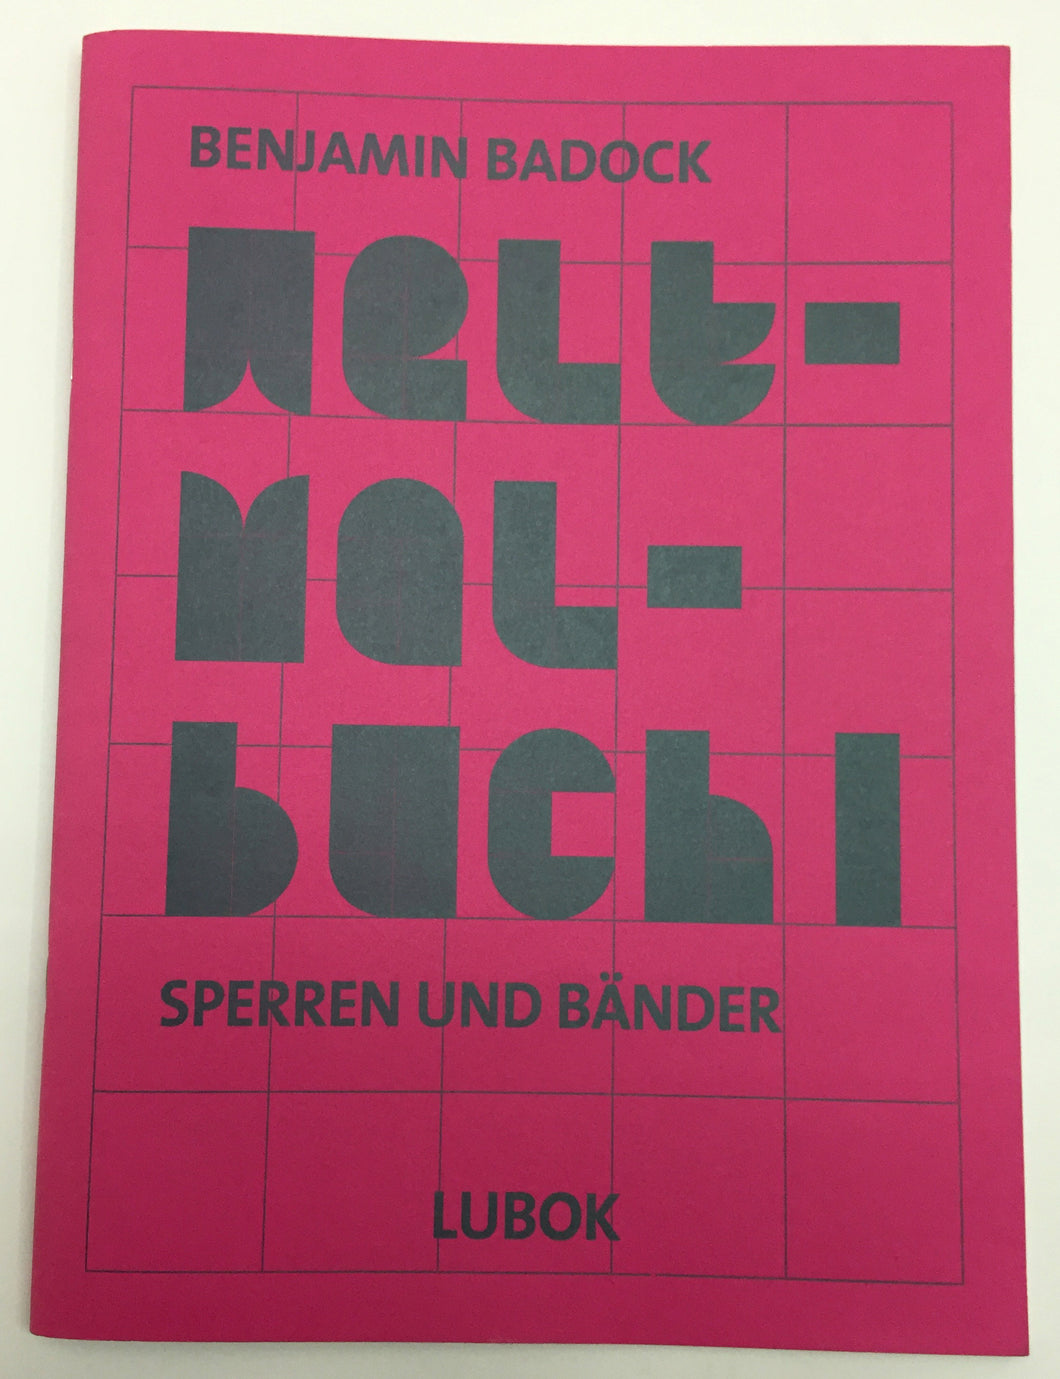 Weltmalbuch | Benjamin Badock (Lubok)